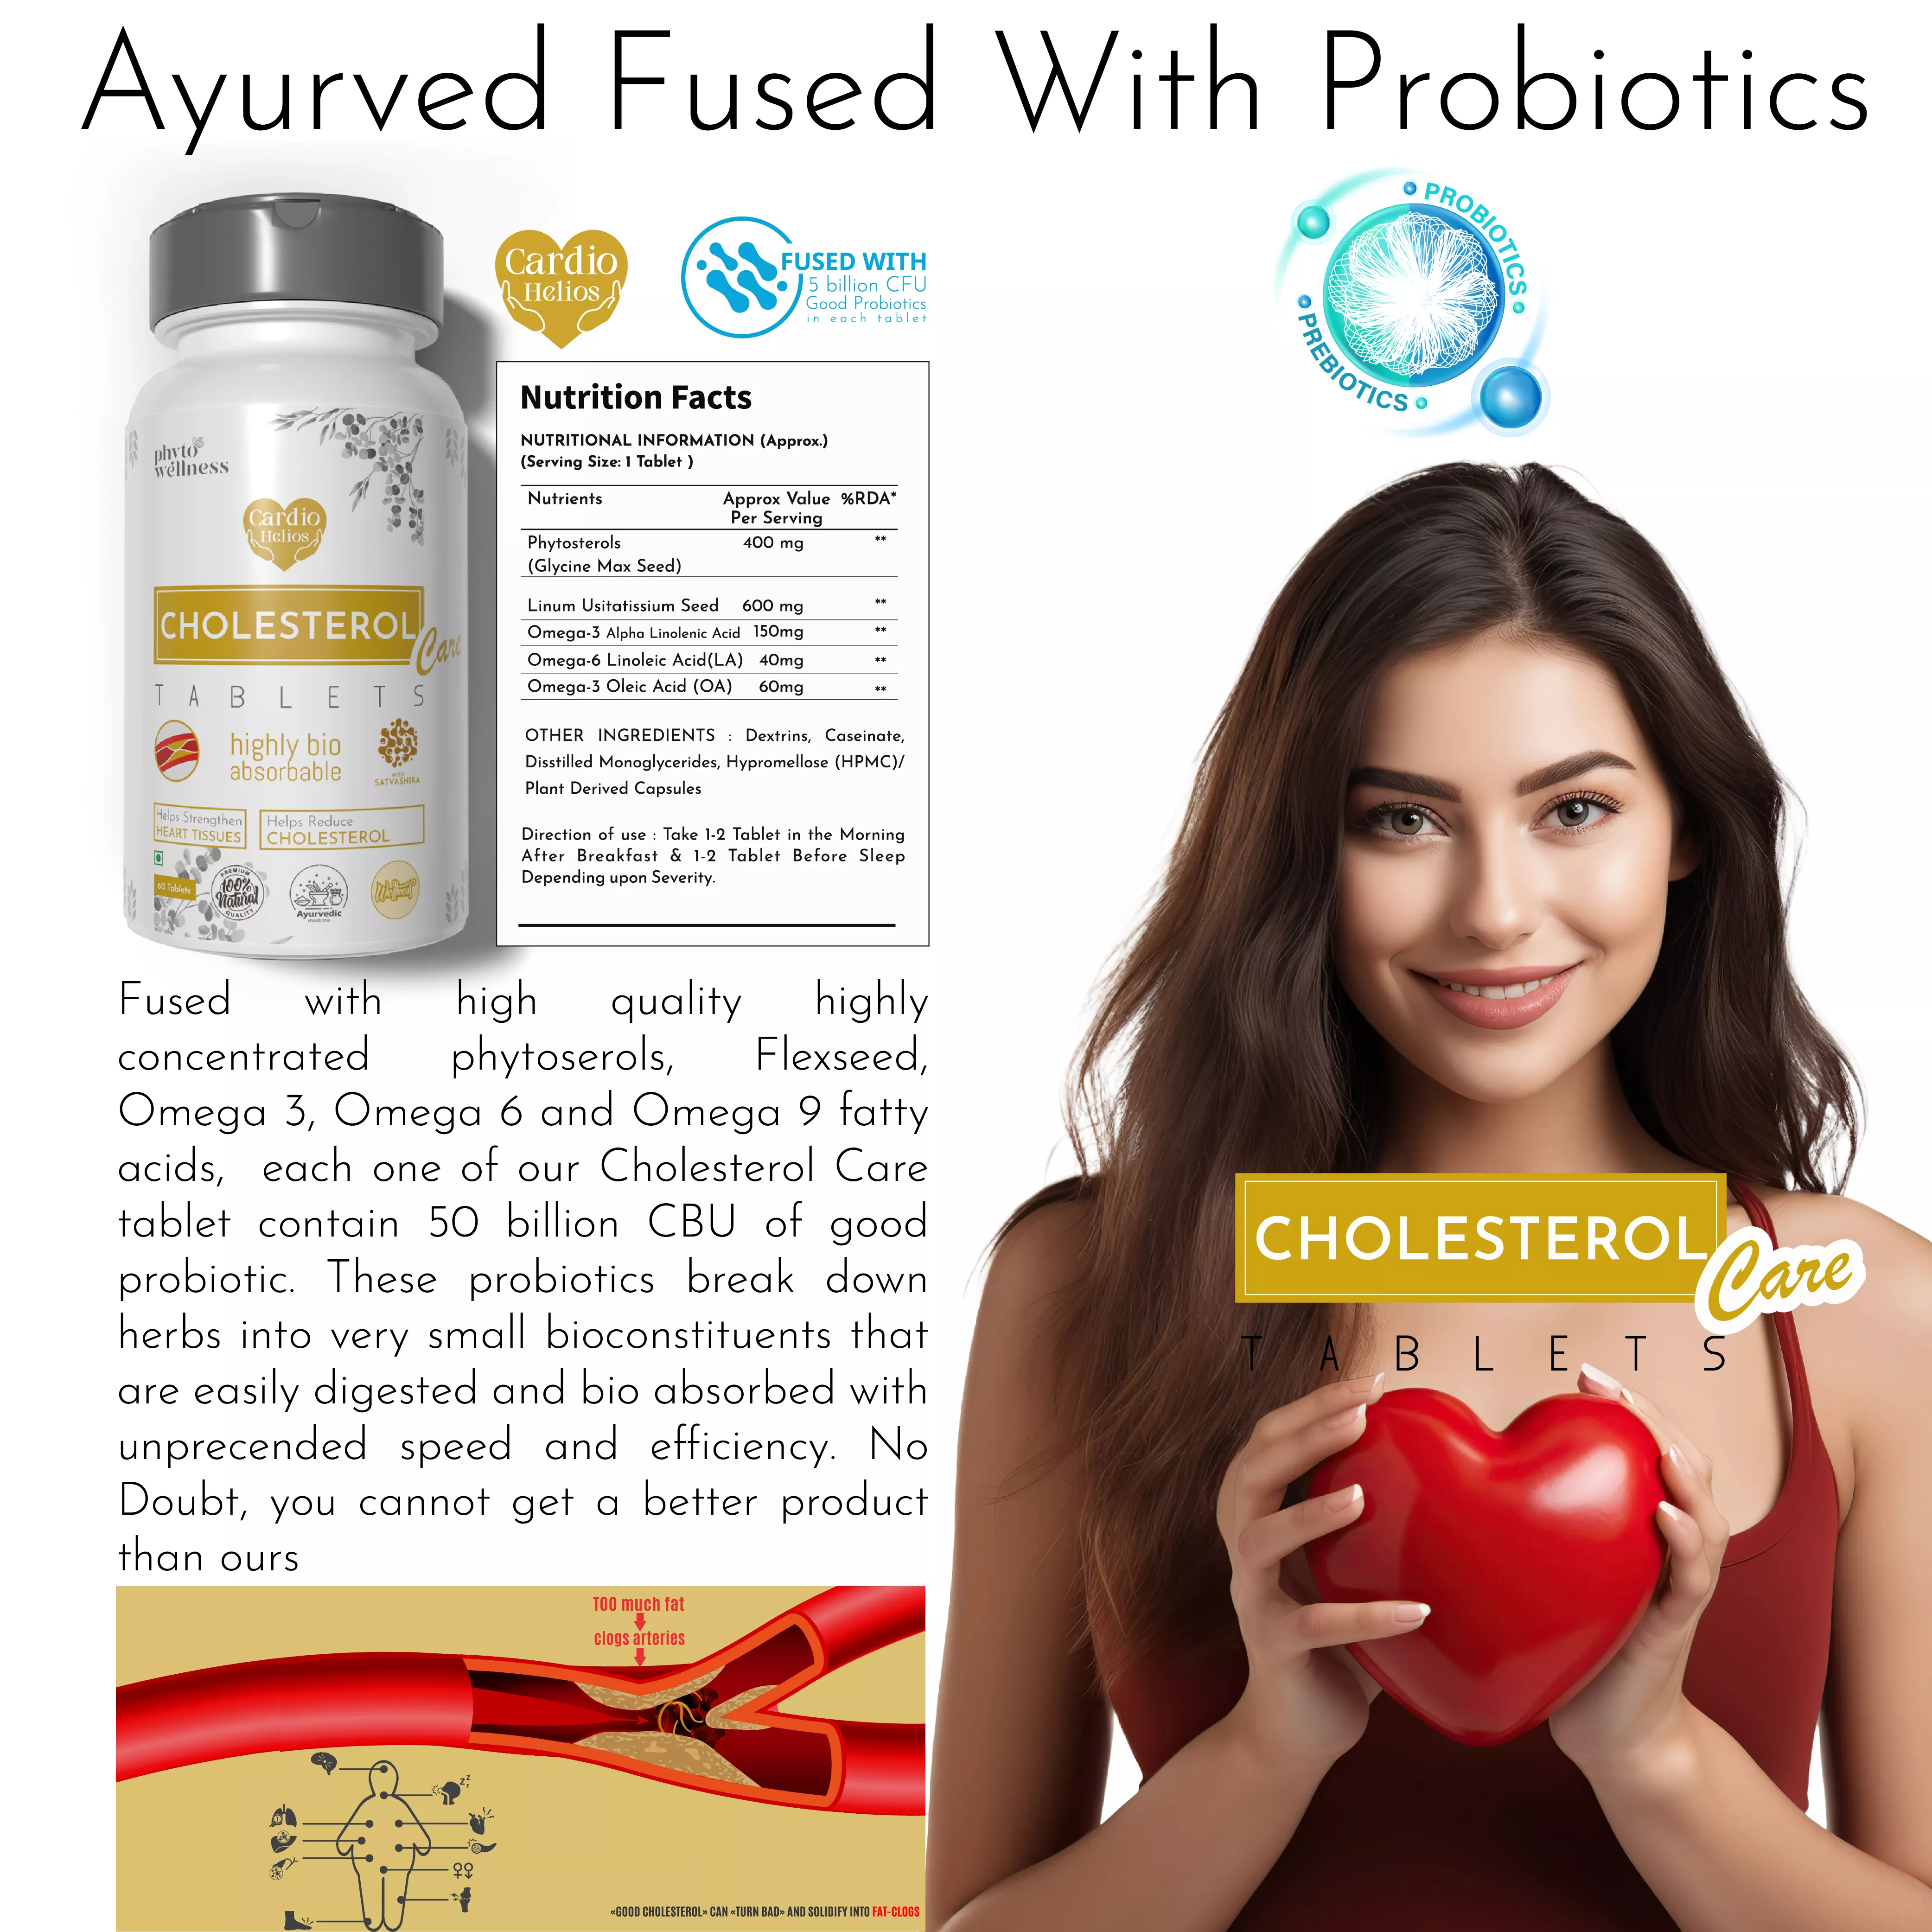 Probiotic Cholesterol Care 60 Tablets